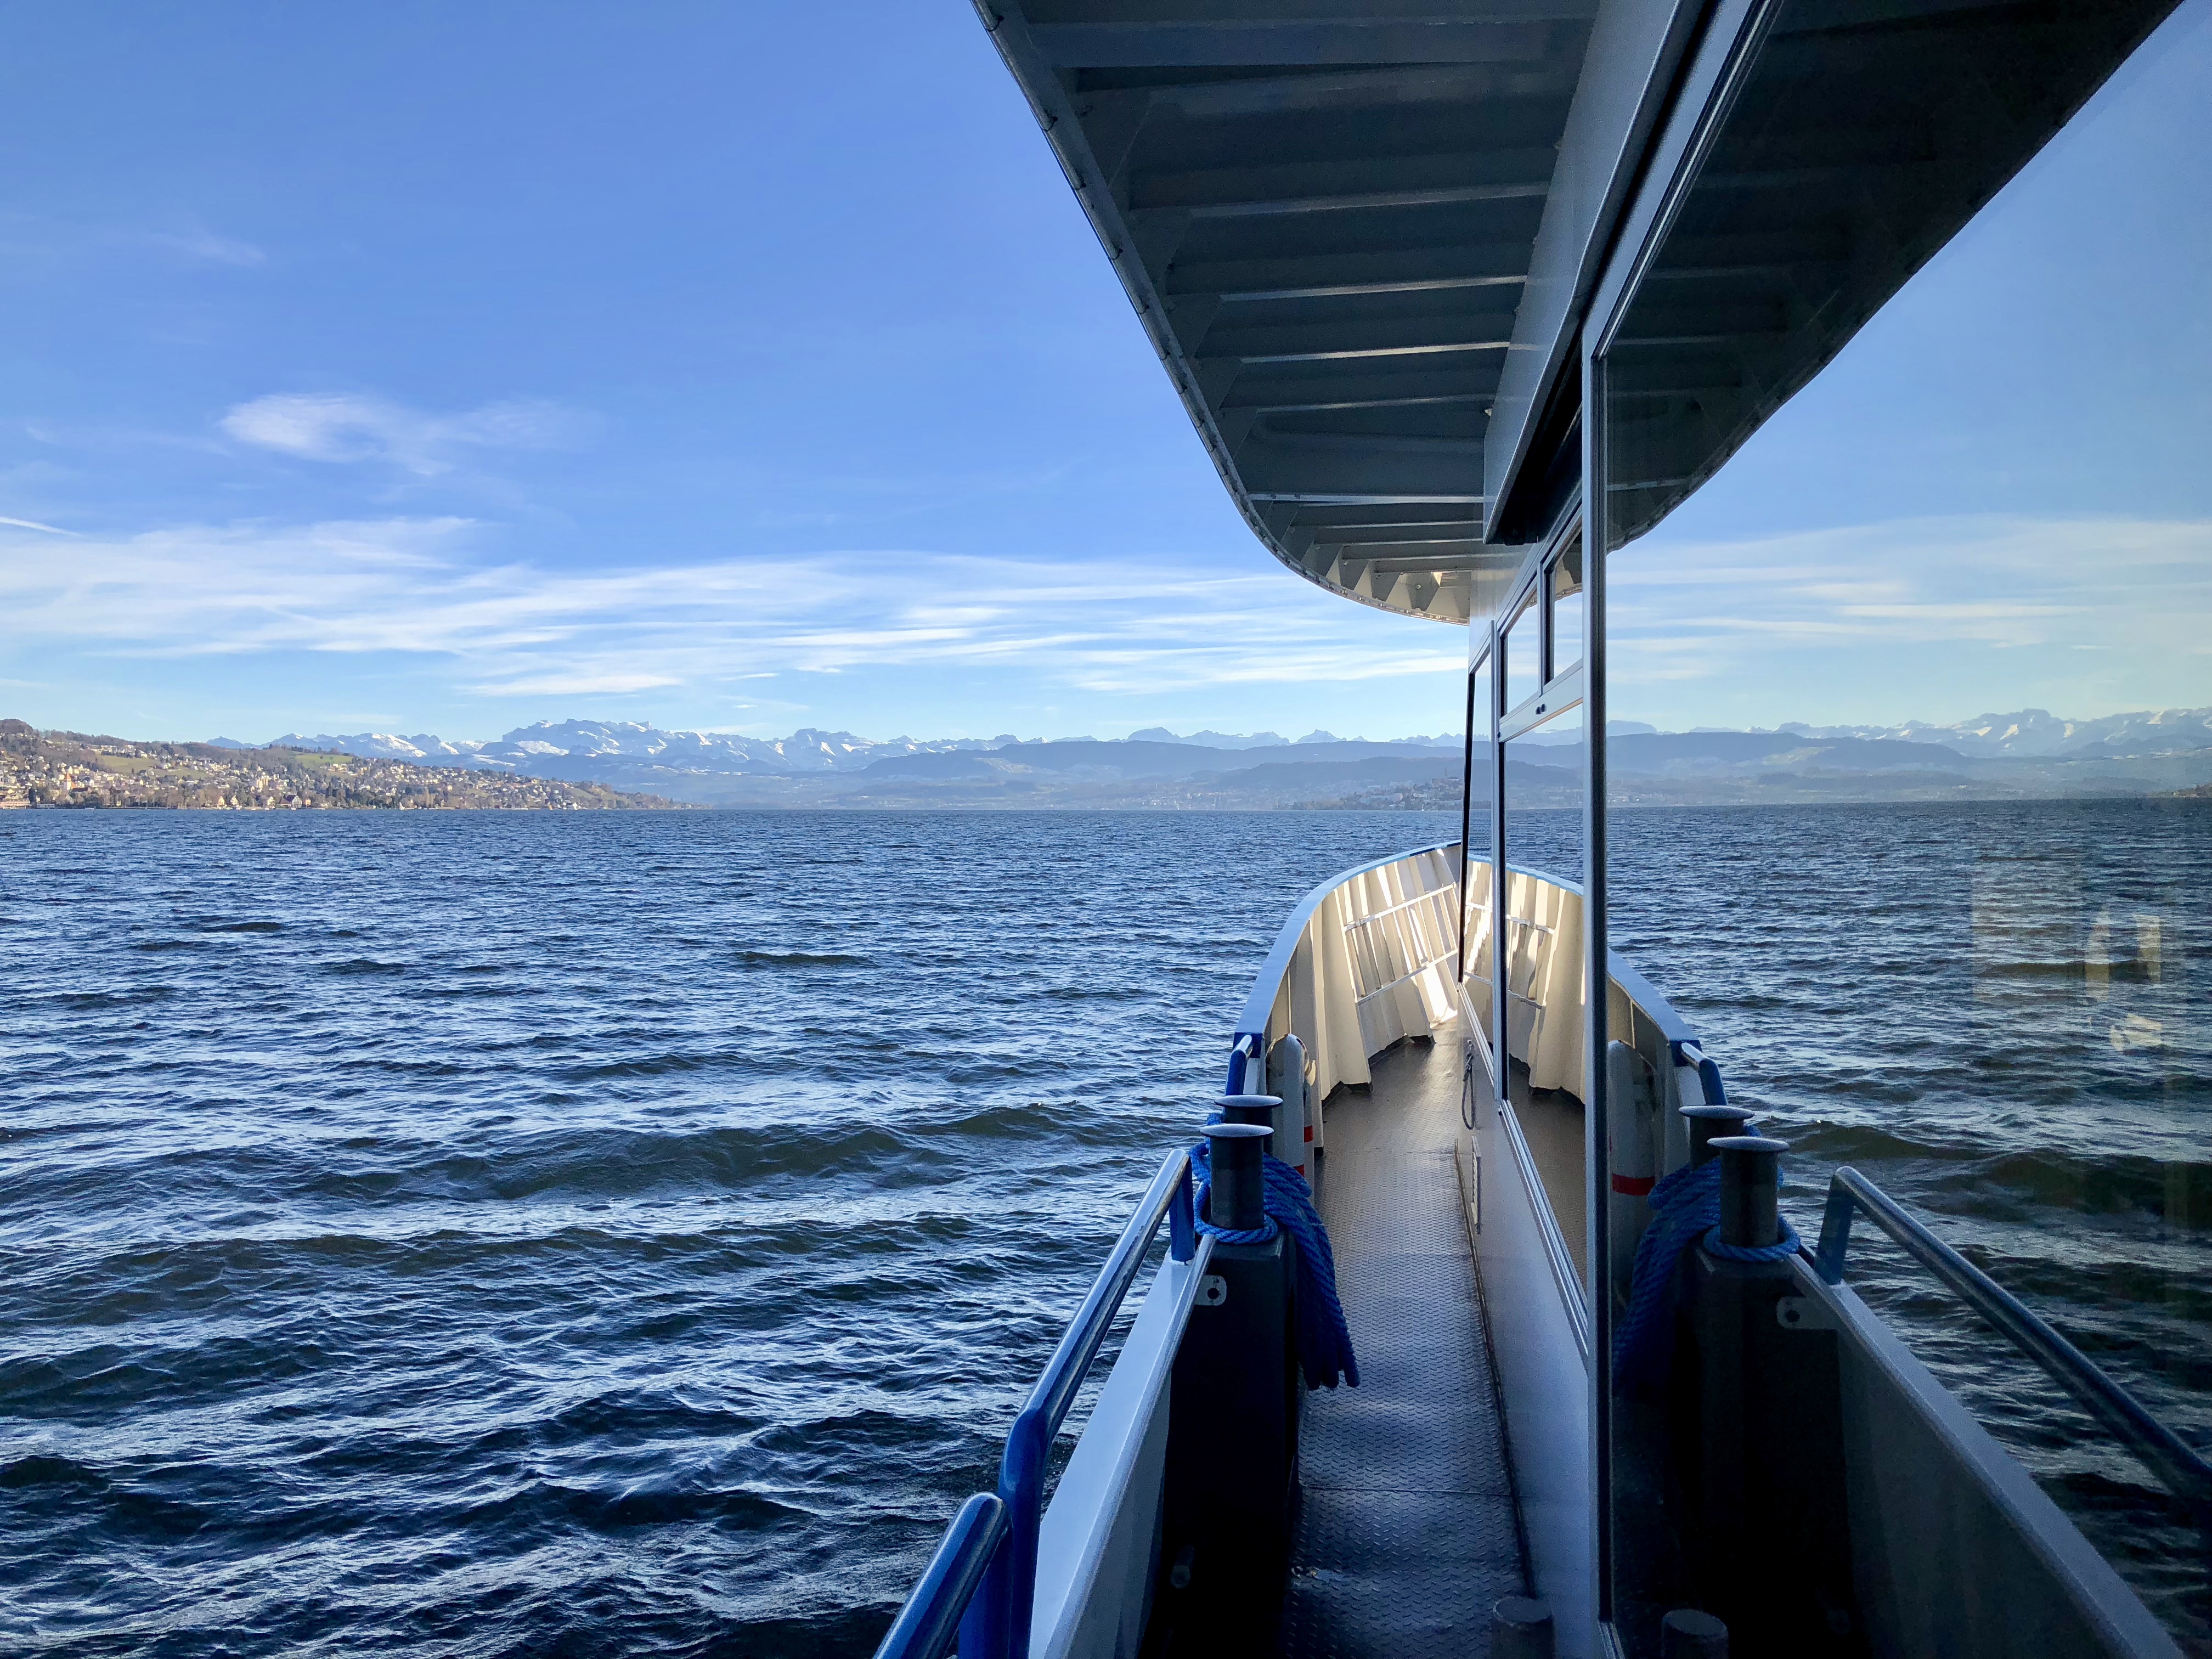 Views from a boat cruise in Zurich, Switzerland.